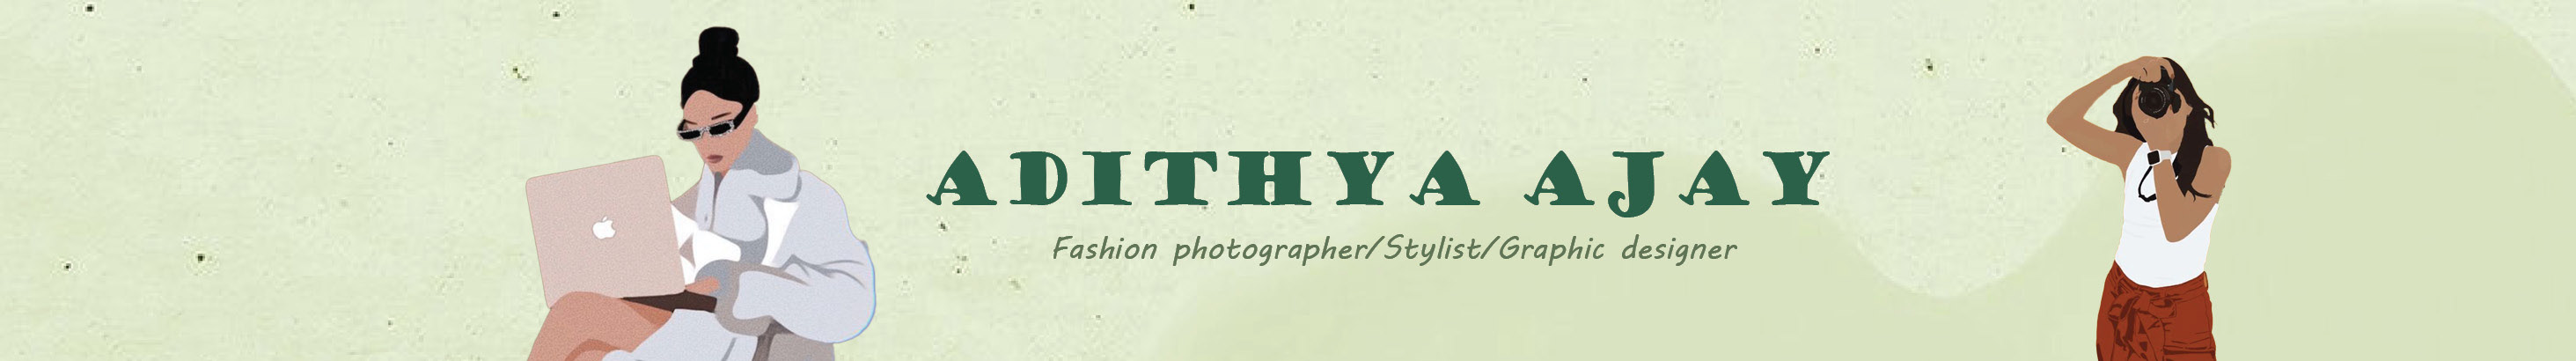 Adithya Ajay のプロファイルバナー